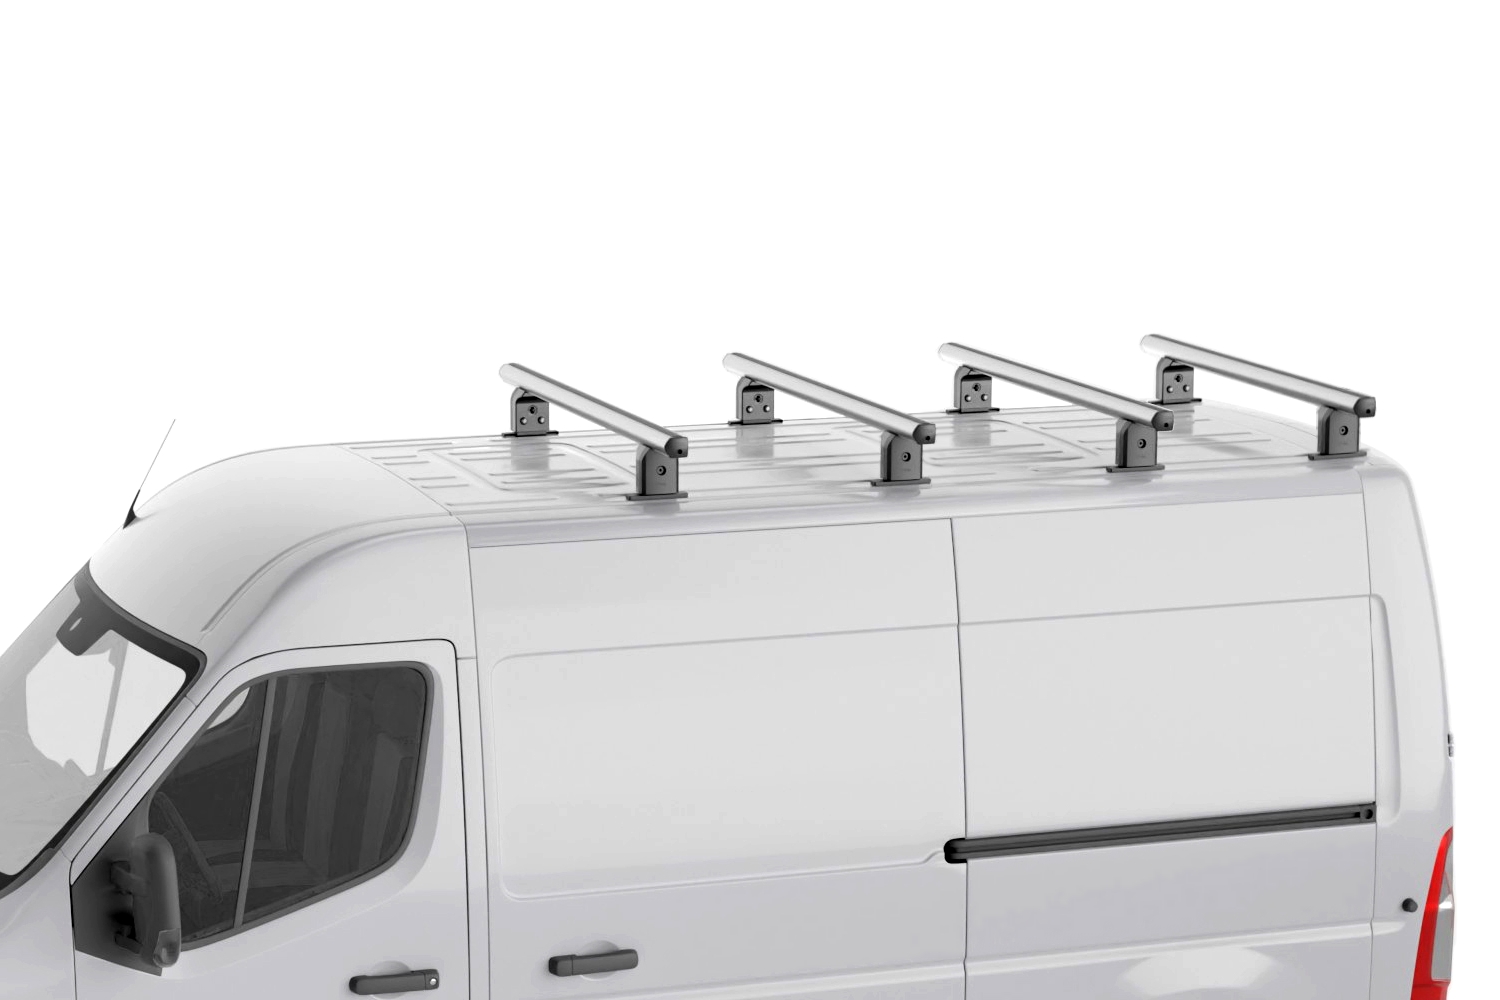 Dachträger passend für Citroën SpaceTourer 2016-heute Menabo Professional Airdyn Aluminium - 3 Träger